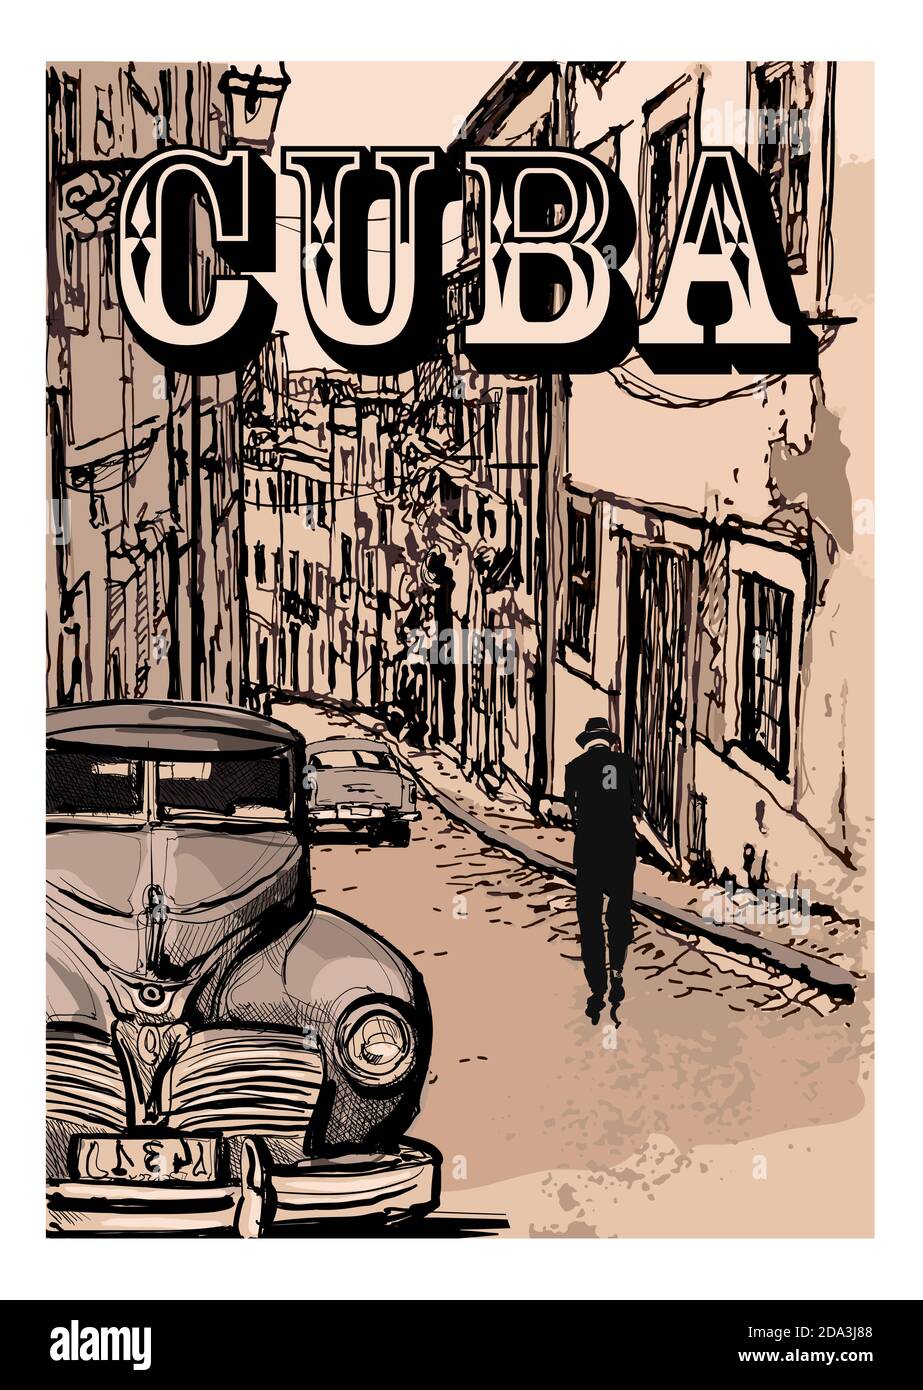 Vintage classic american car in a street of Havana, Cuba - vector illustration Stock Vector